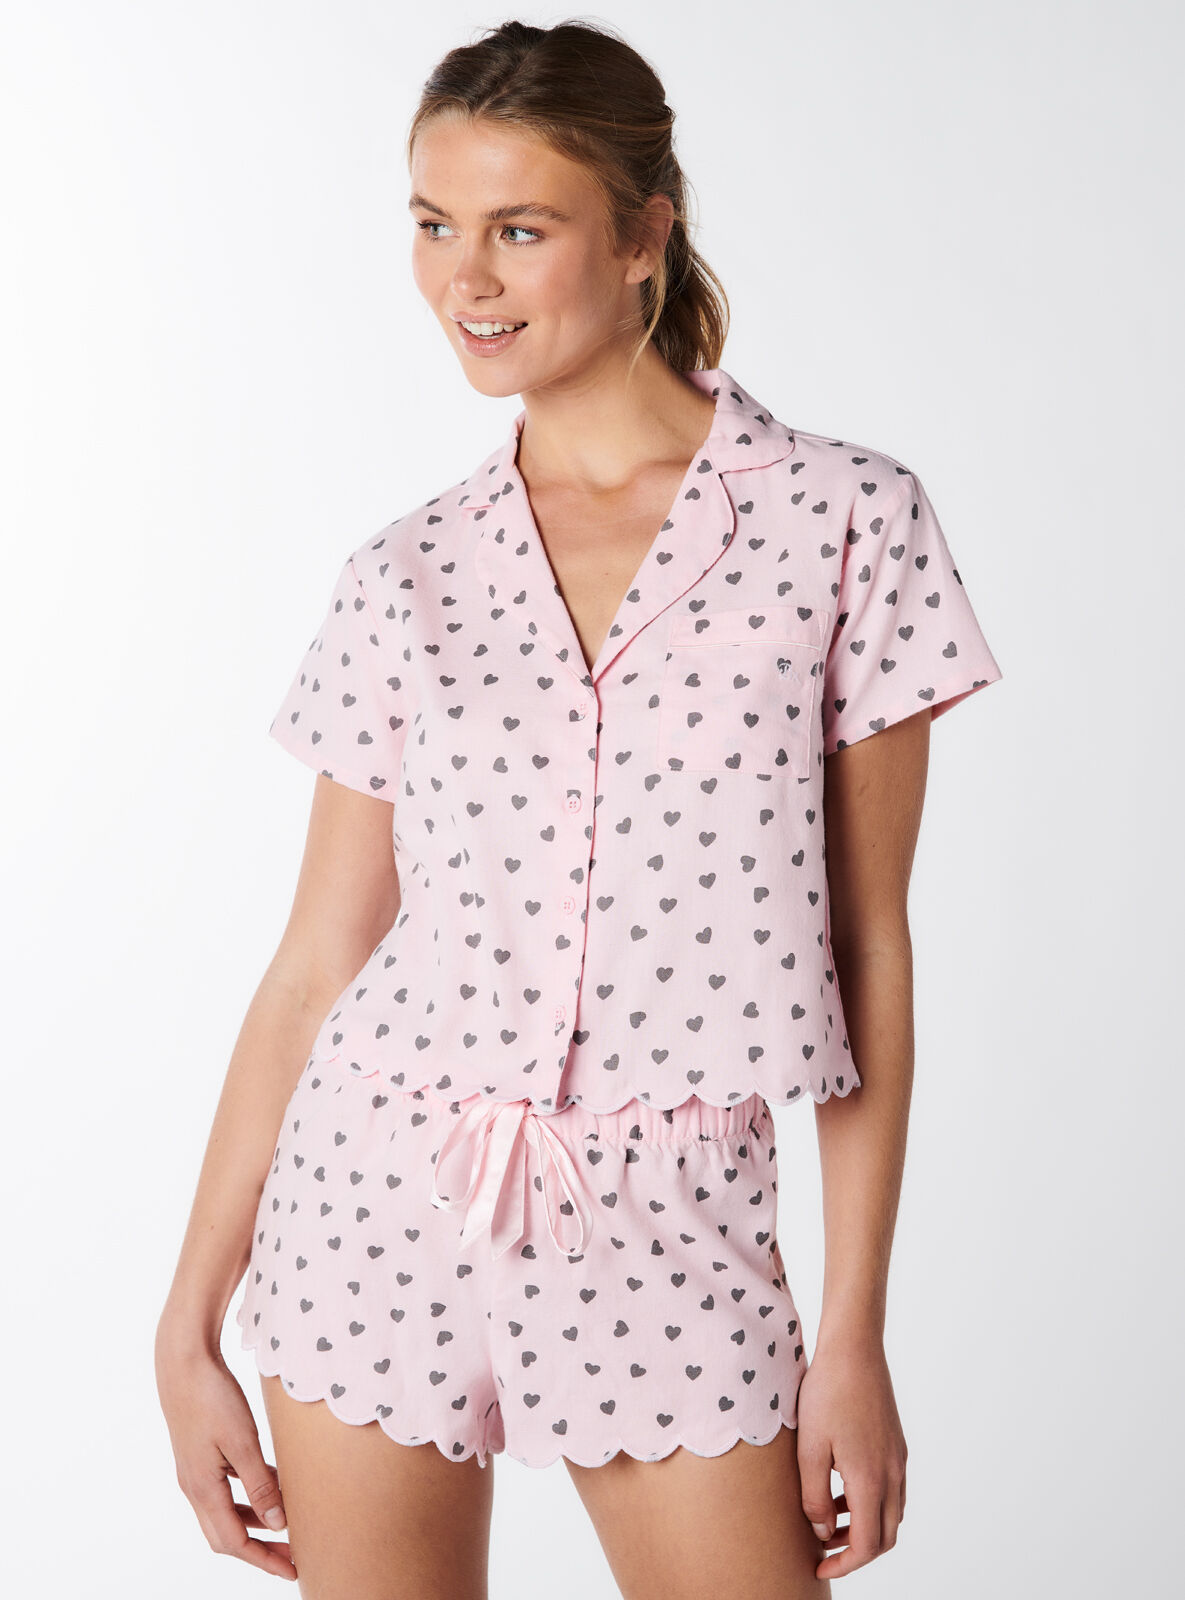 Boux Avenue Heart scallop cotton short pyjama set - Pink Mix - 06